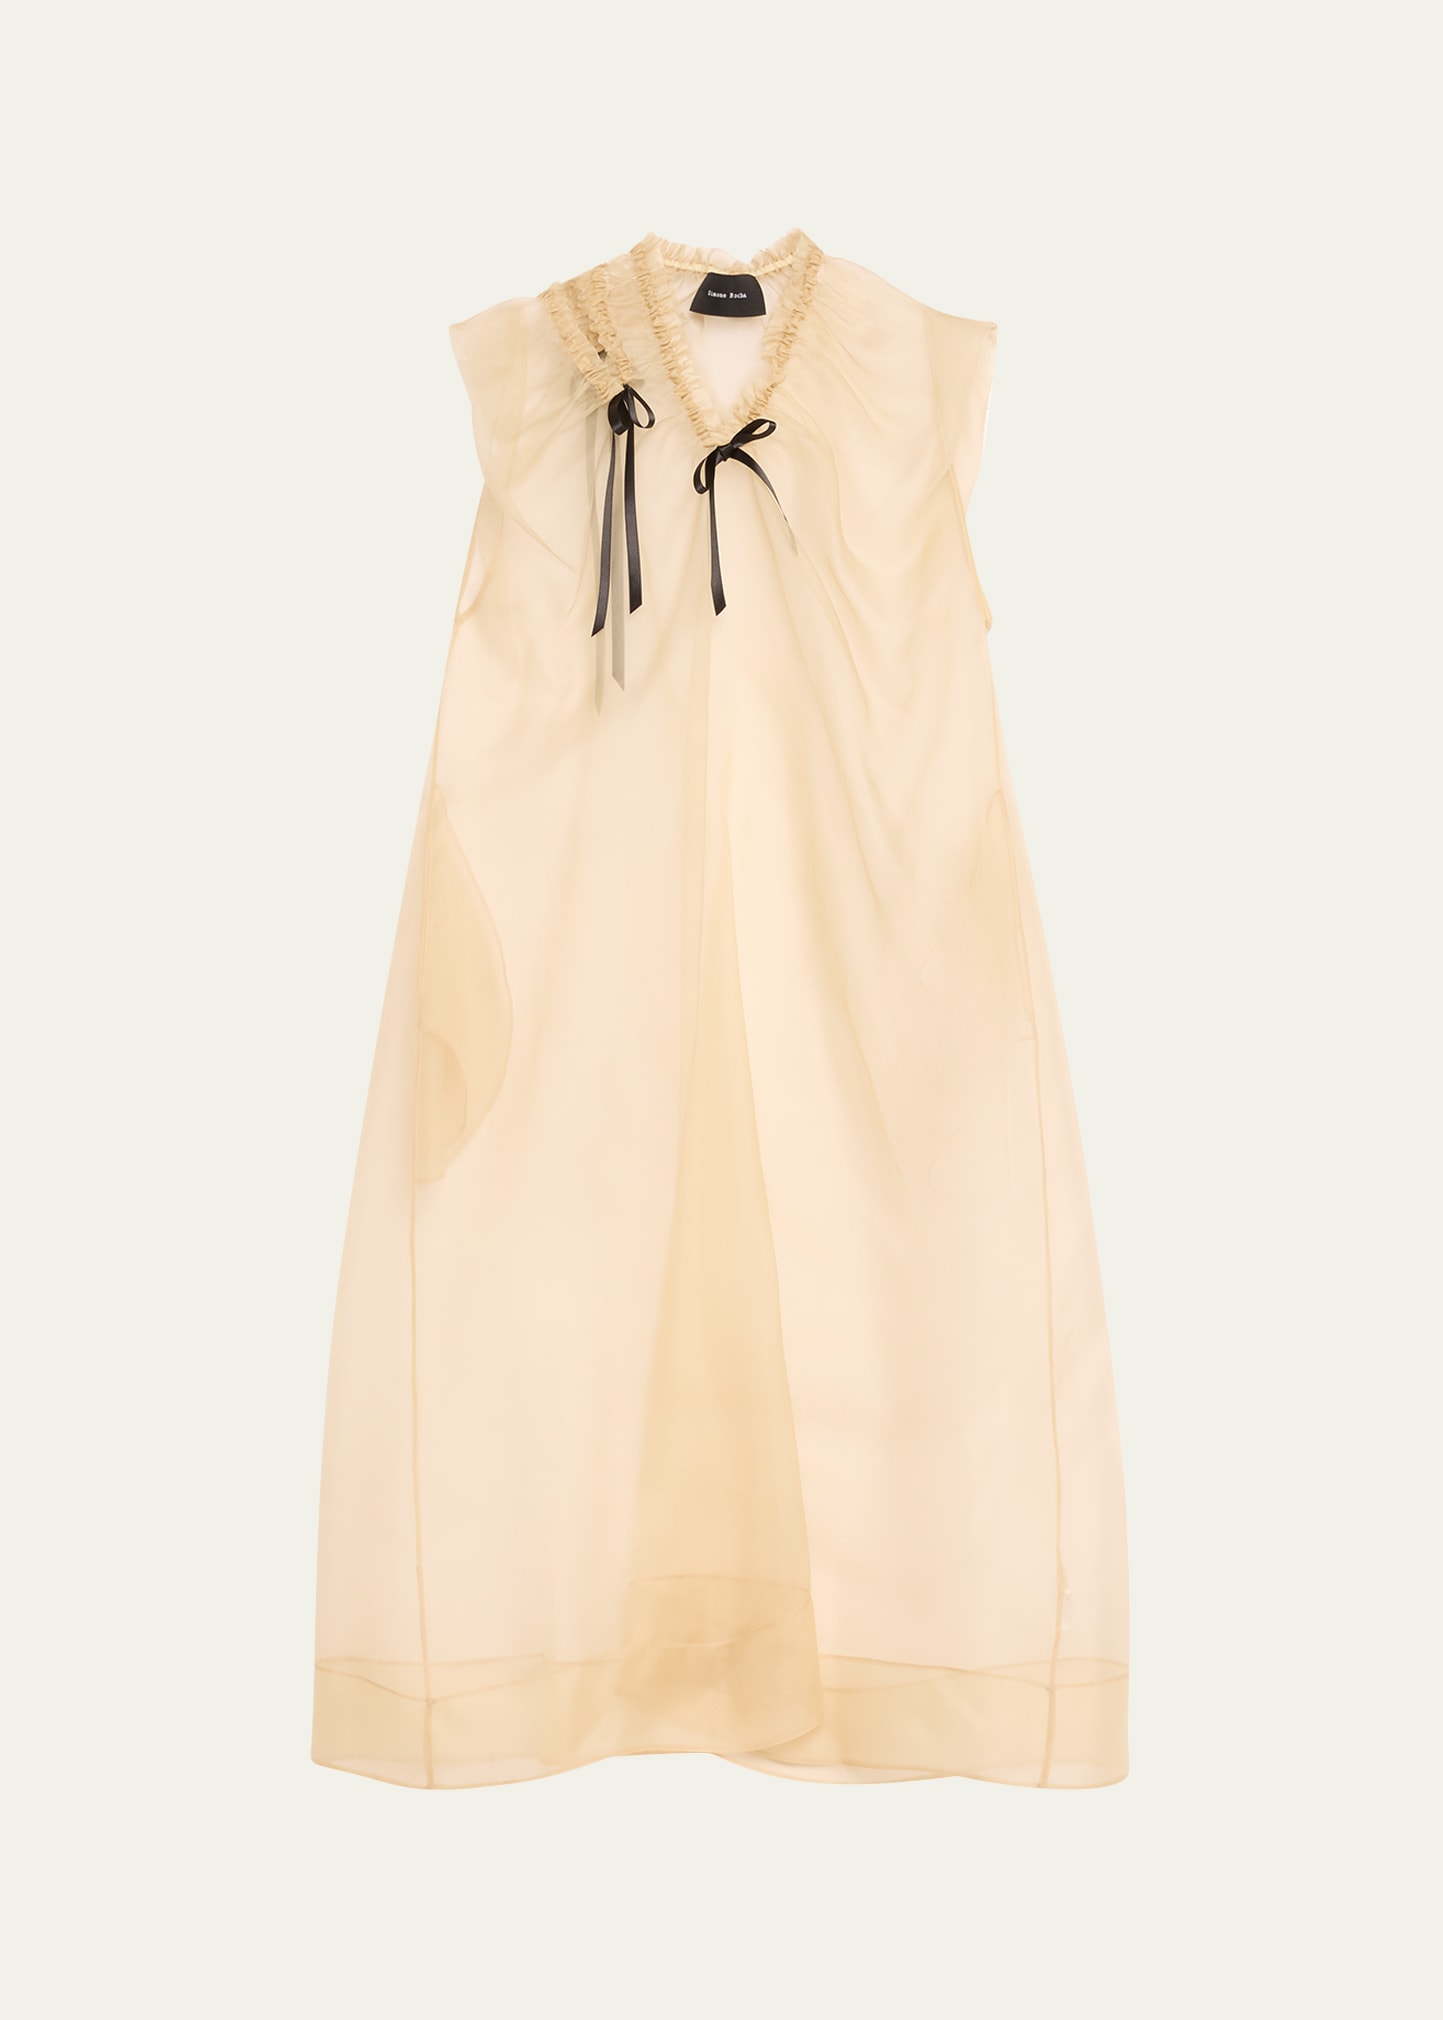 Organza Cutout Midi Sack Dress with Bow